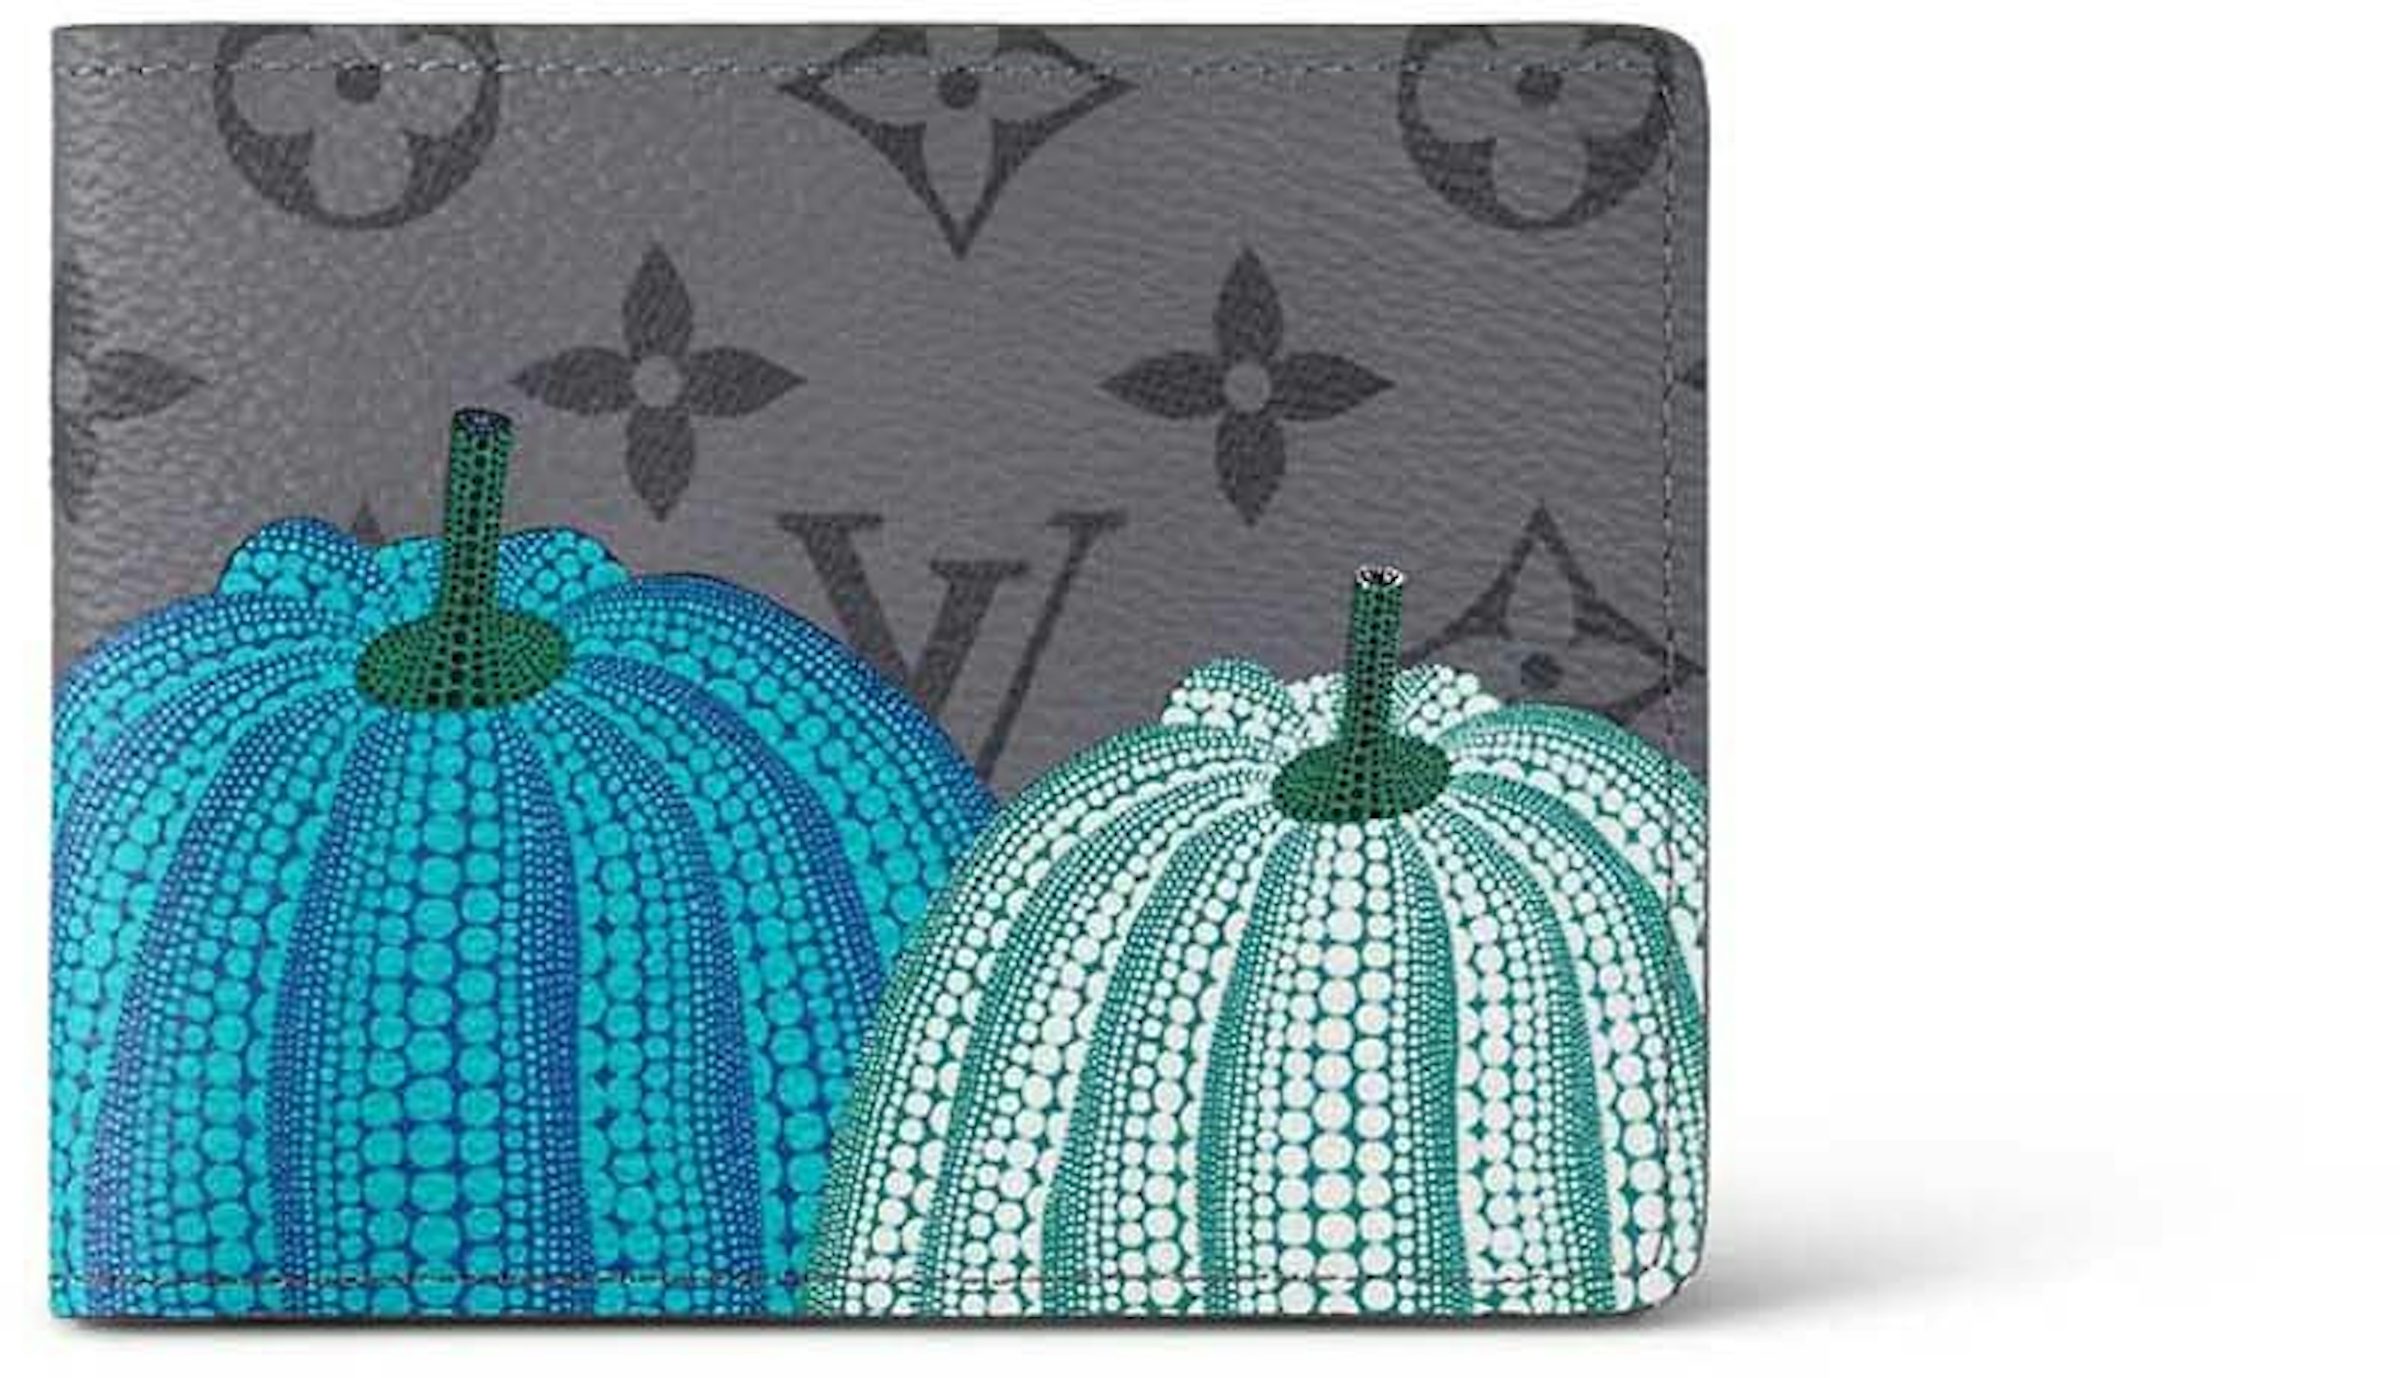 Louis Vuitton LV x YK Romy Card Holder Pumpkin Print in Monogram